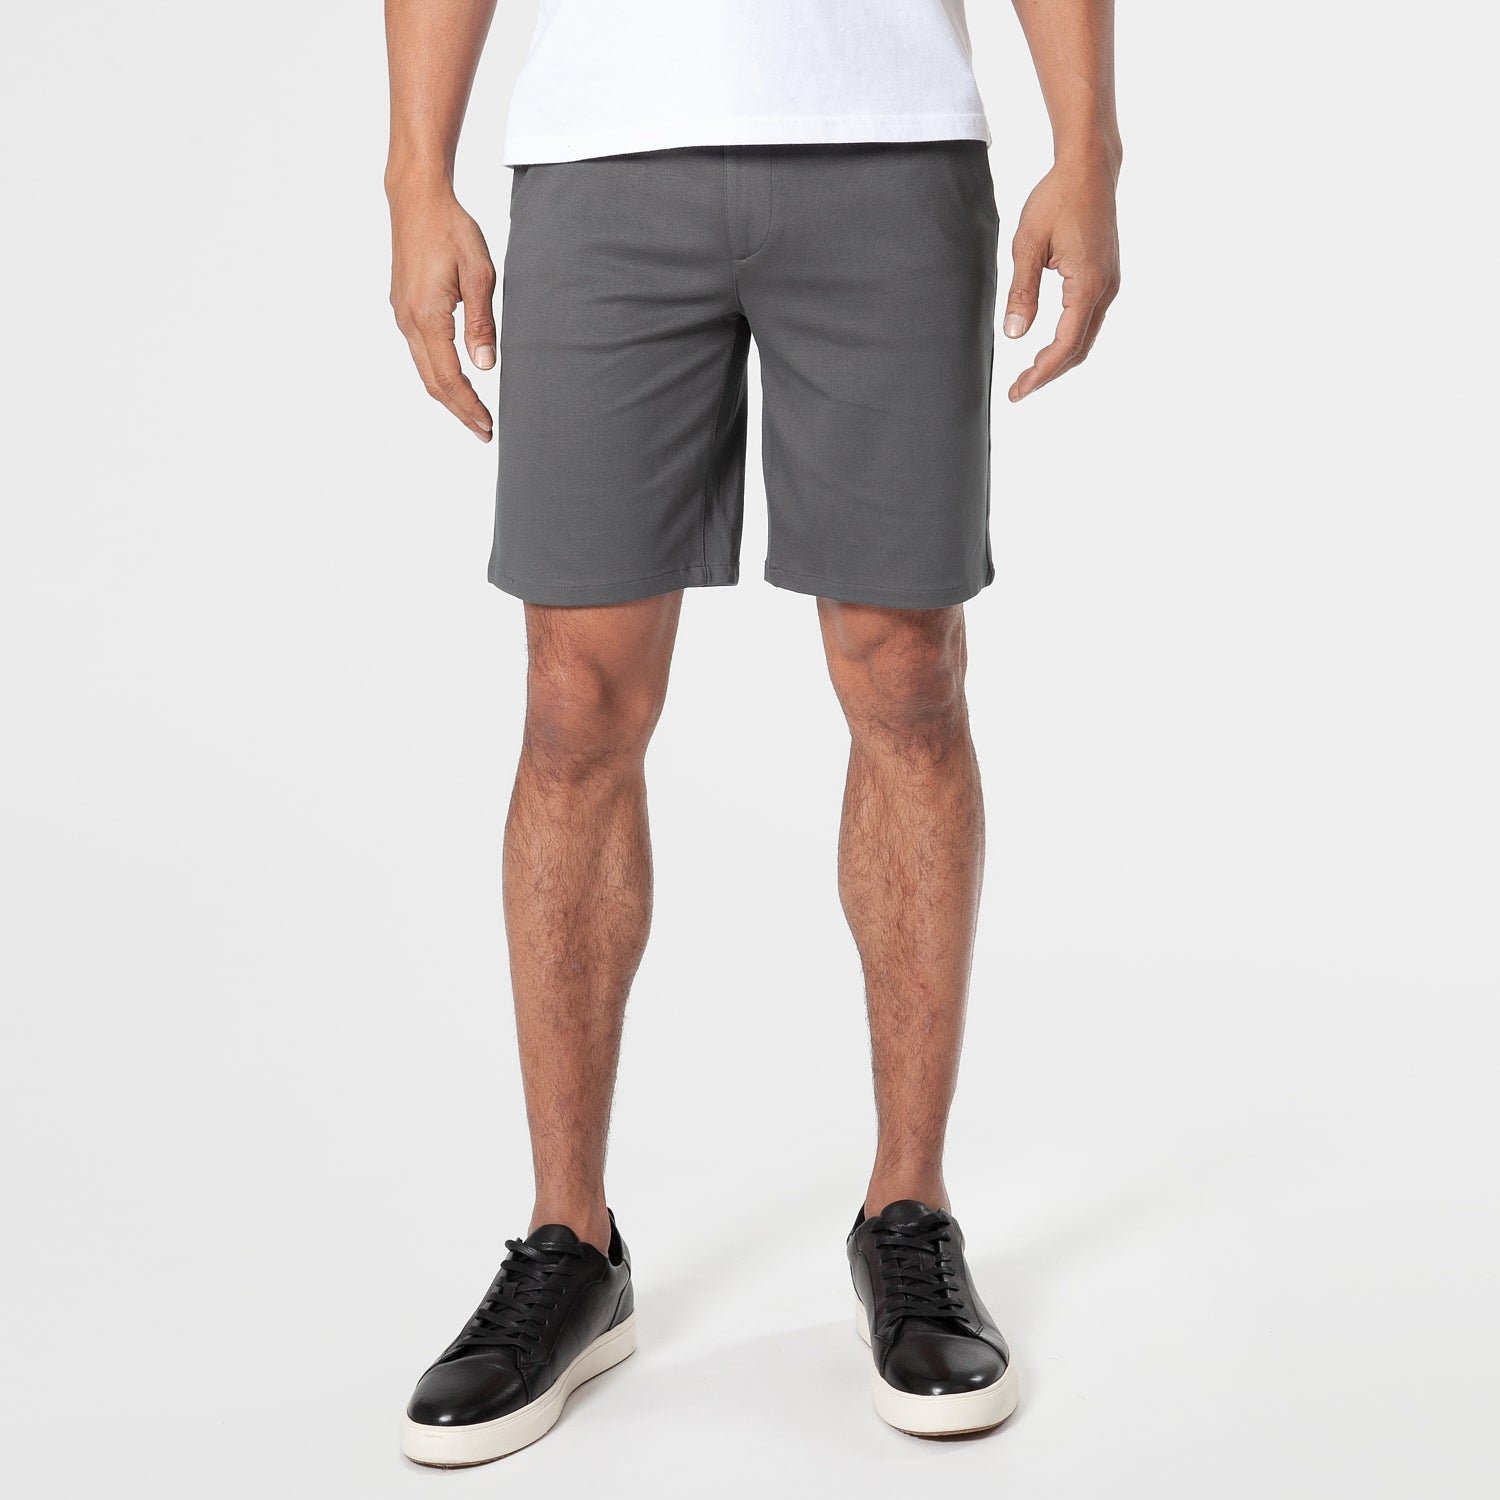 9.5" Carbon and Khaki Chino Shorts 2-Pack